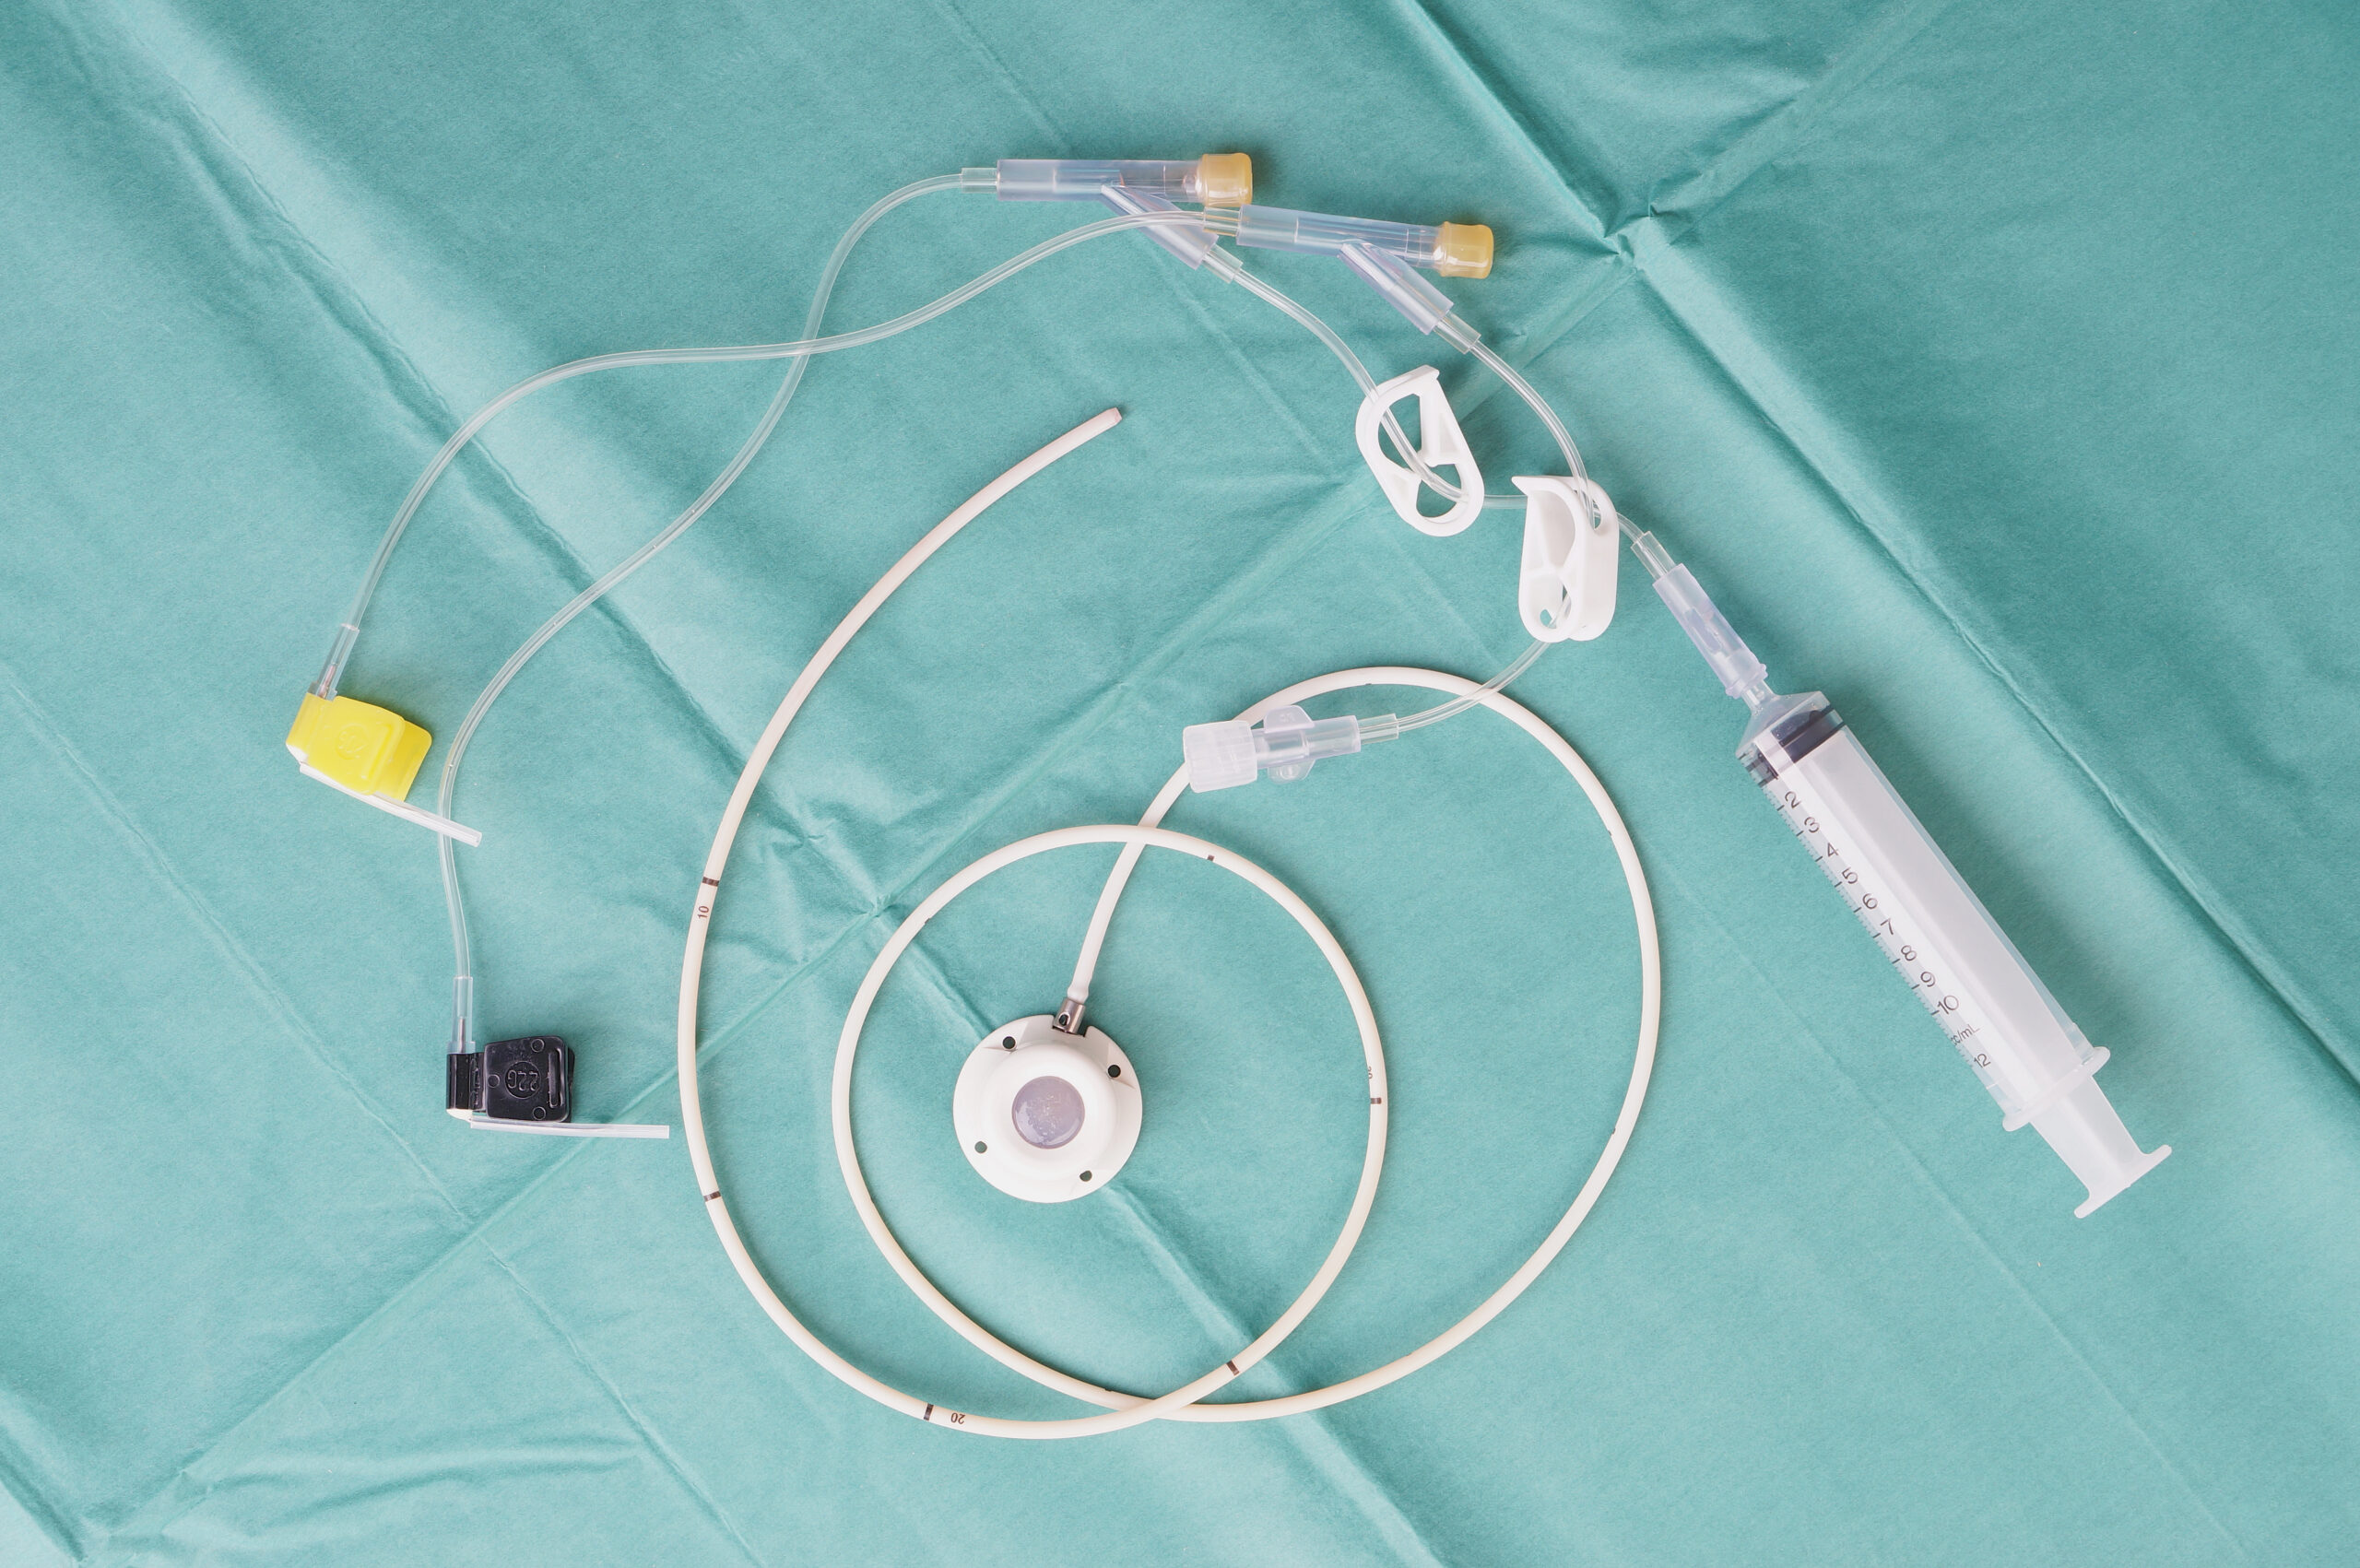 Port a catheter or central venous port insertion